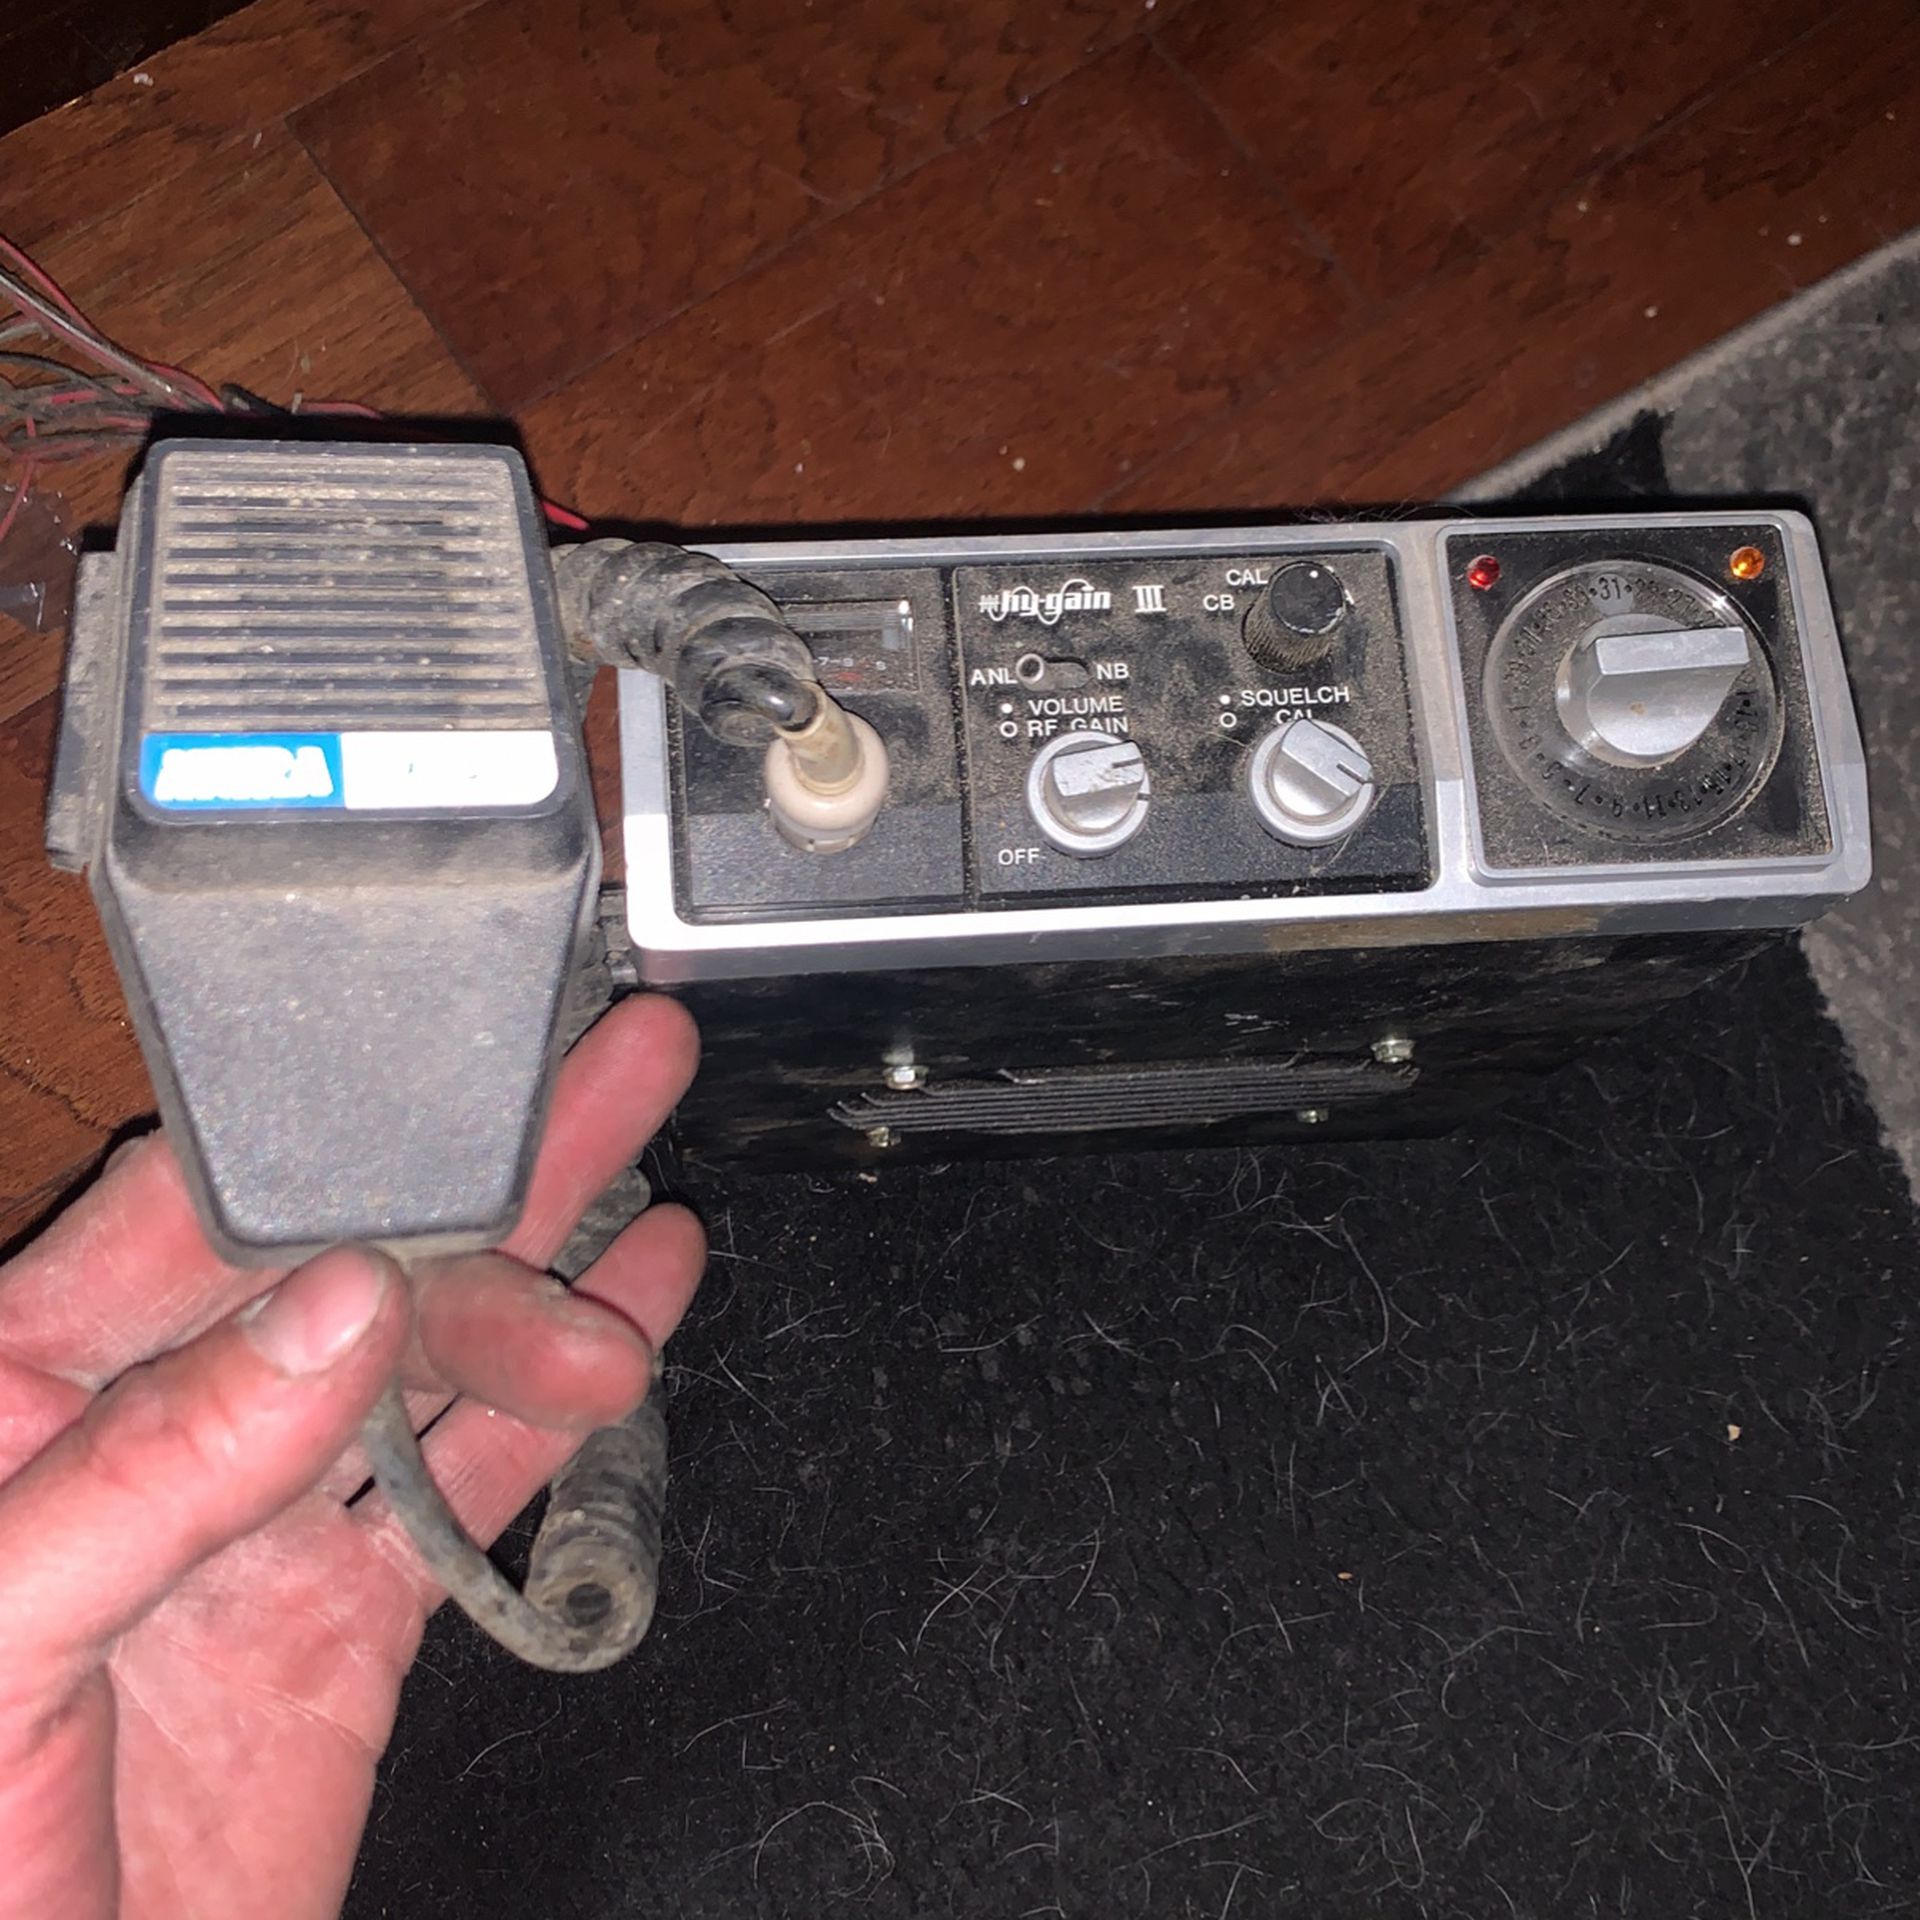 Vintage Hy-gain Can Radio 